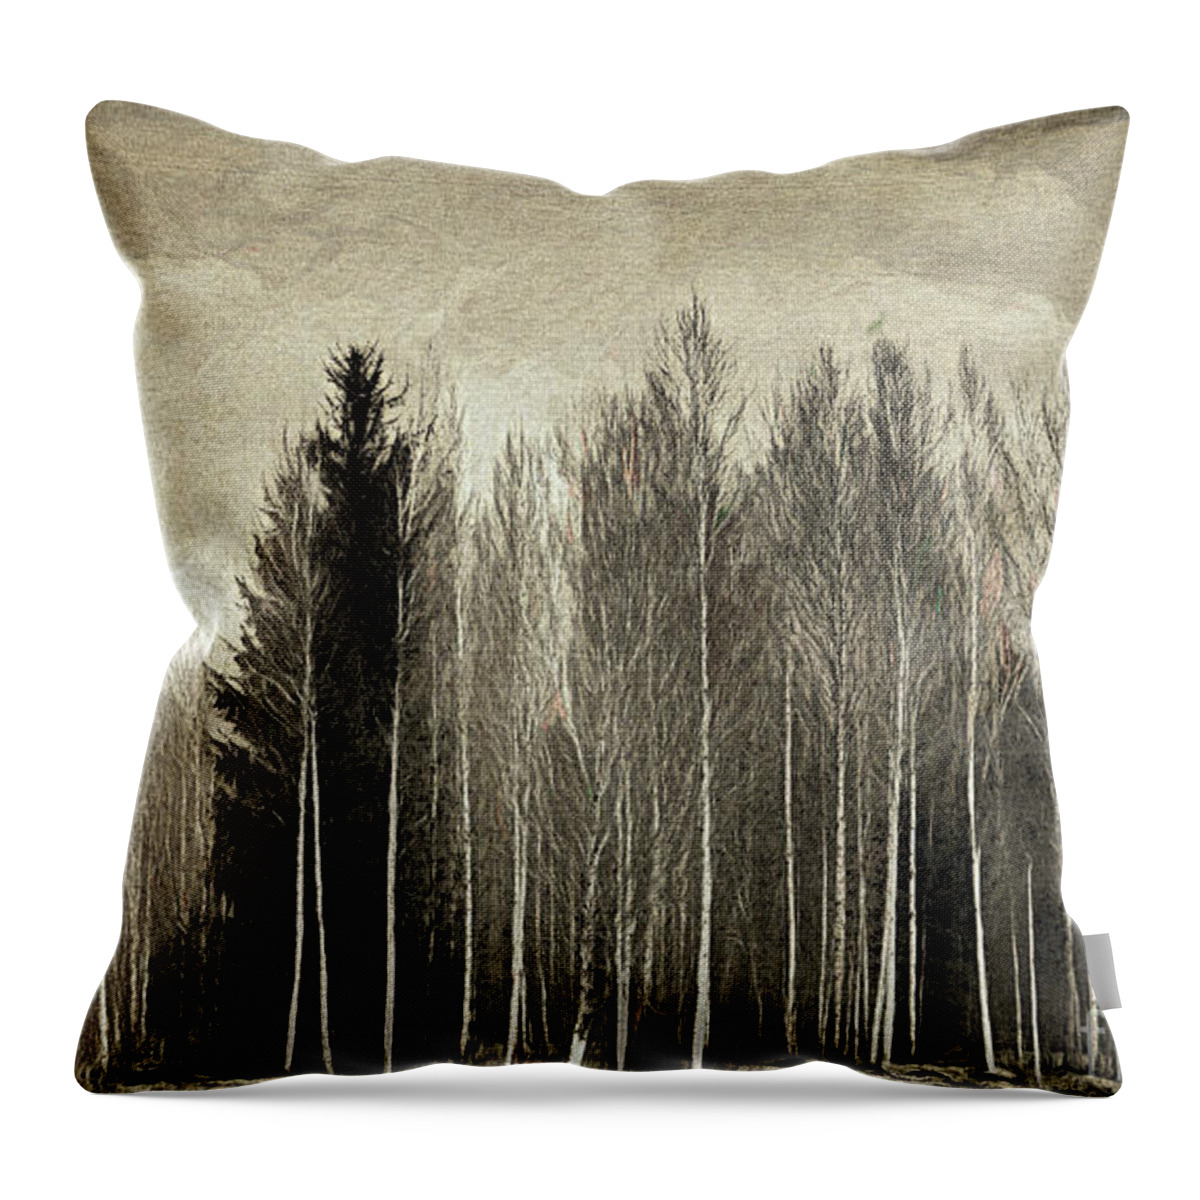 Nag006085 Throw Pillow featuring the digital art Aspen Wood by Edmund Nagele FRPS